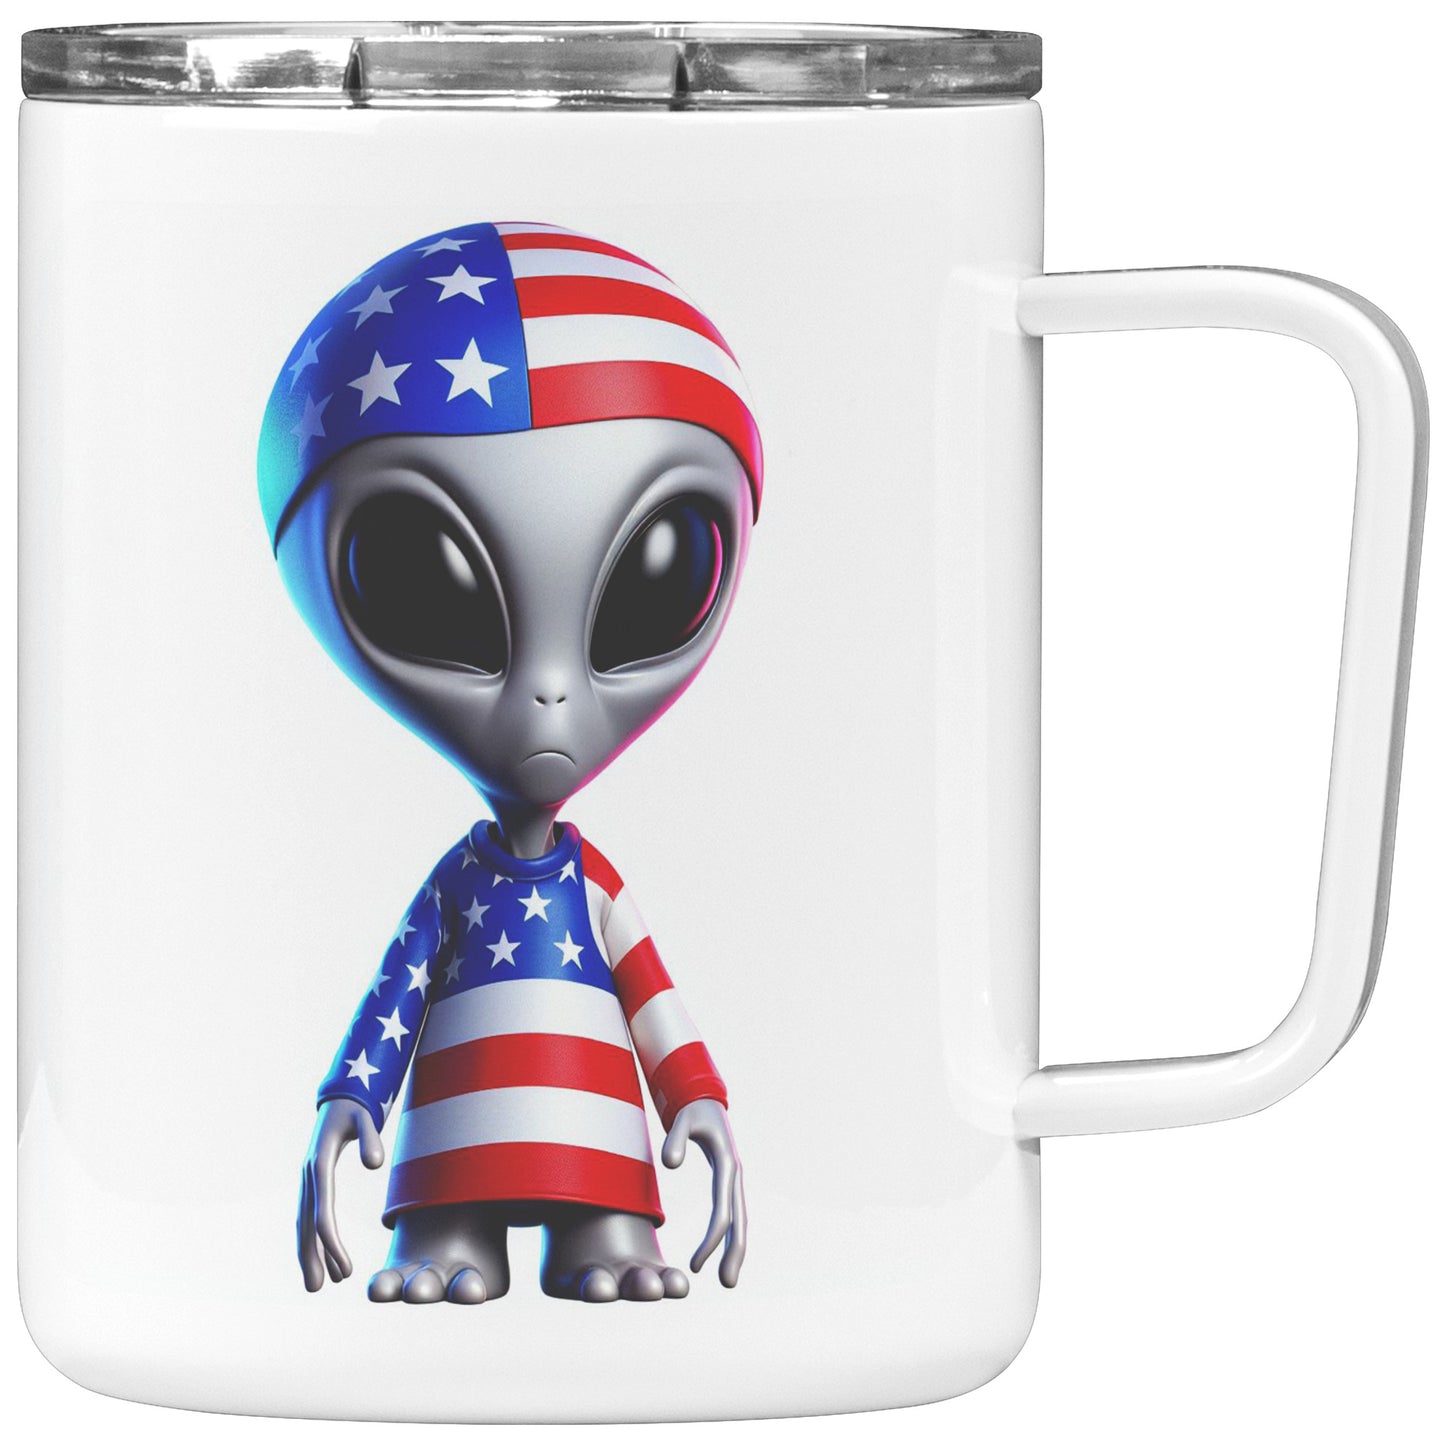 Nebulon the Grey Alien - Insulated Coffee Mug #9